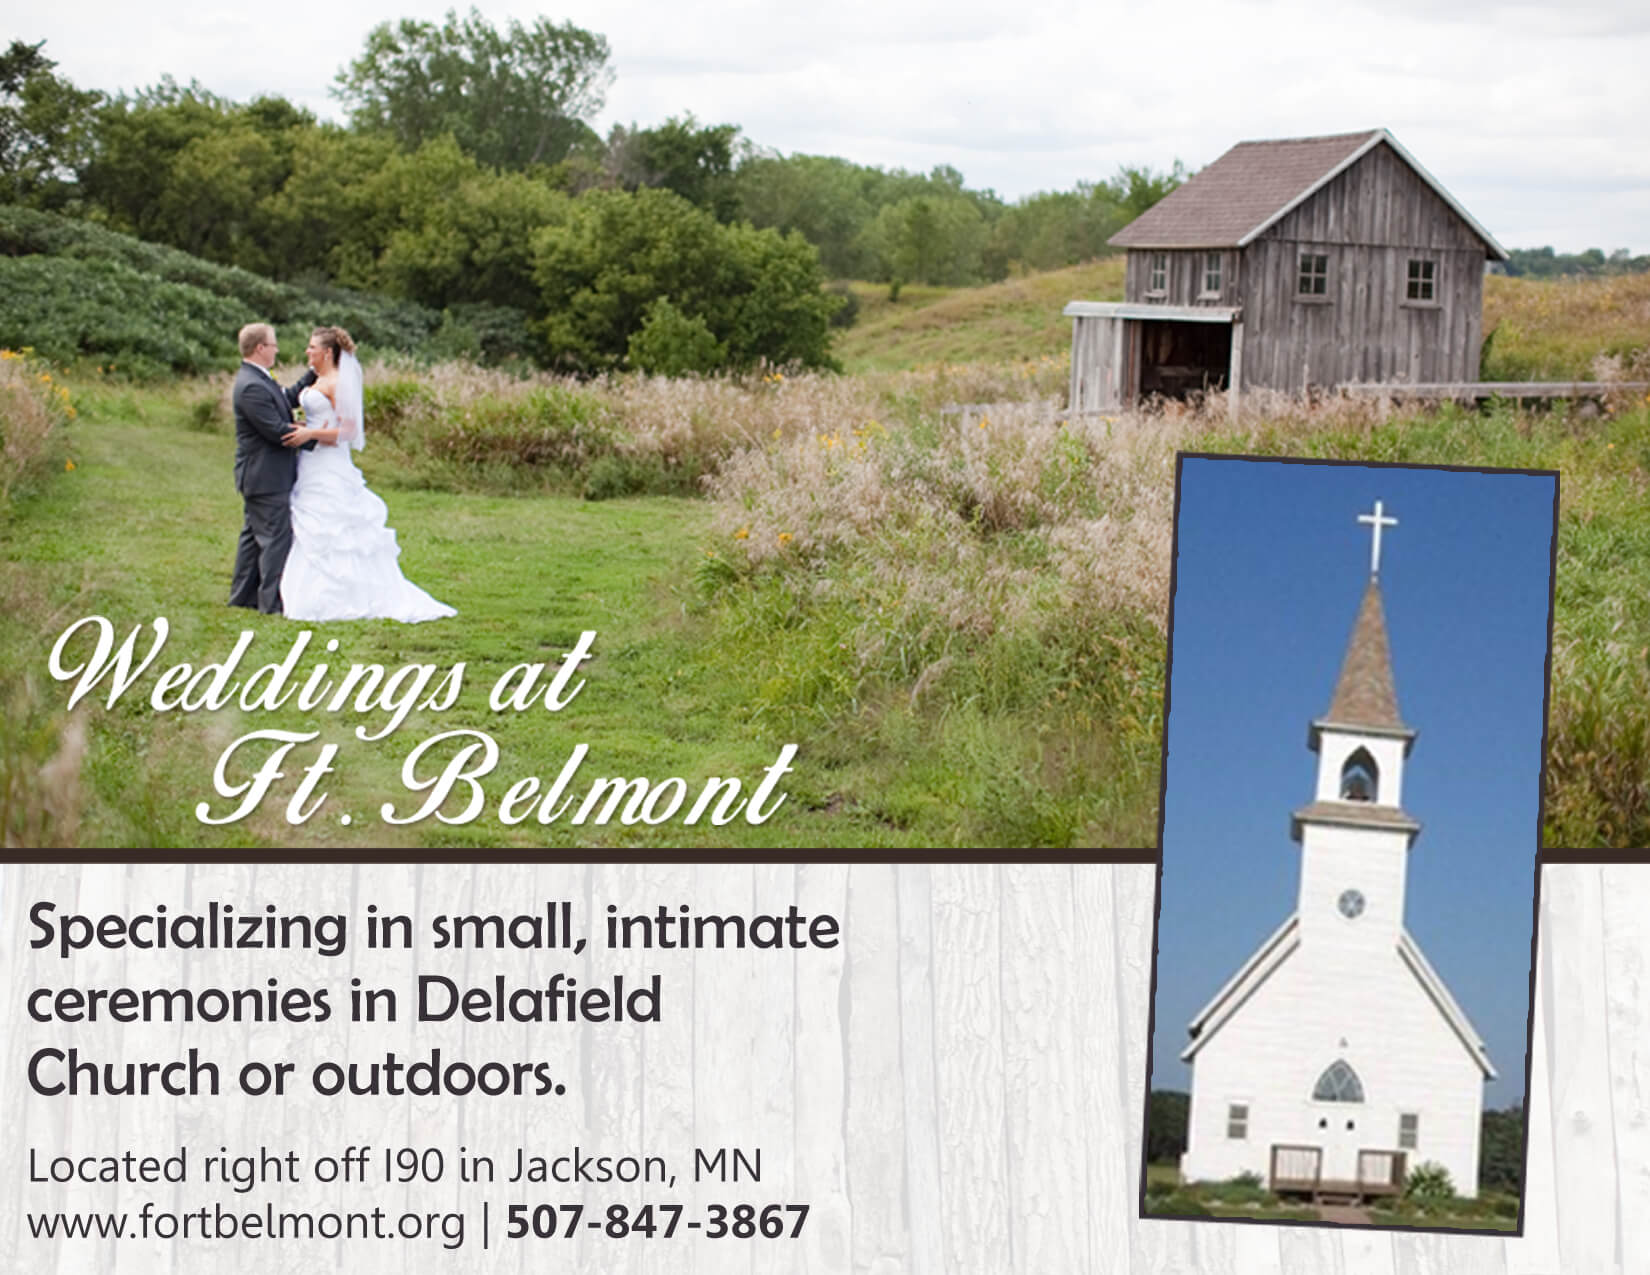 Wedding at Fort Belmont